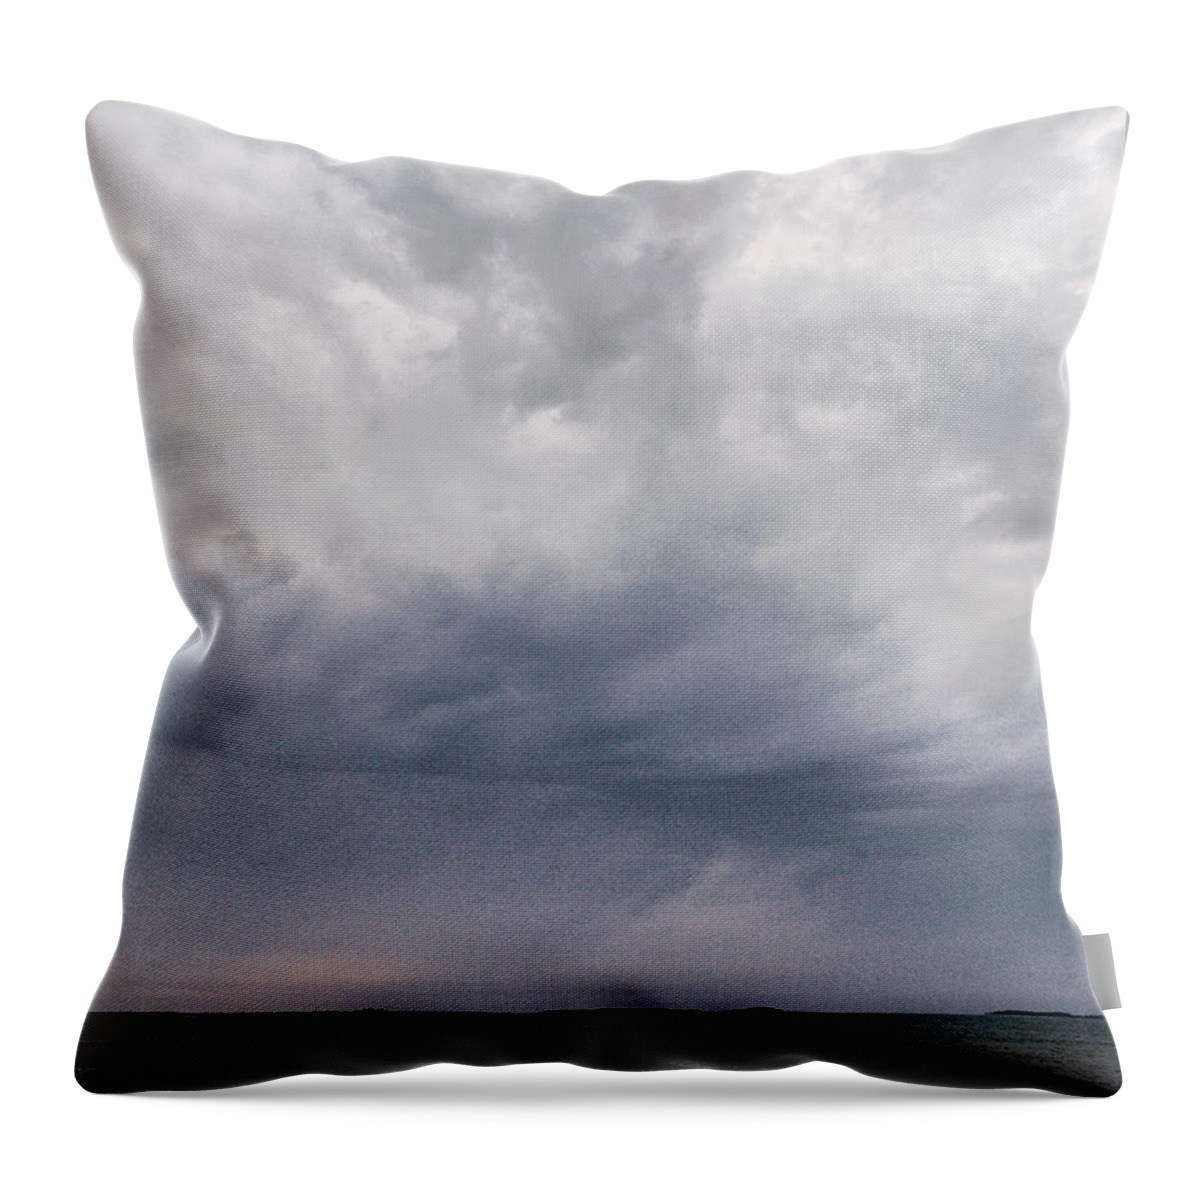 Lehtokukka Throw Pillow featuring the photograph The rising storm 2 by Jouko Lehto